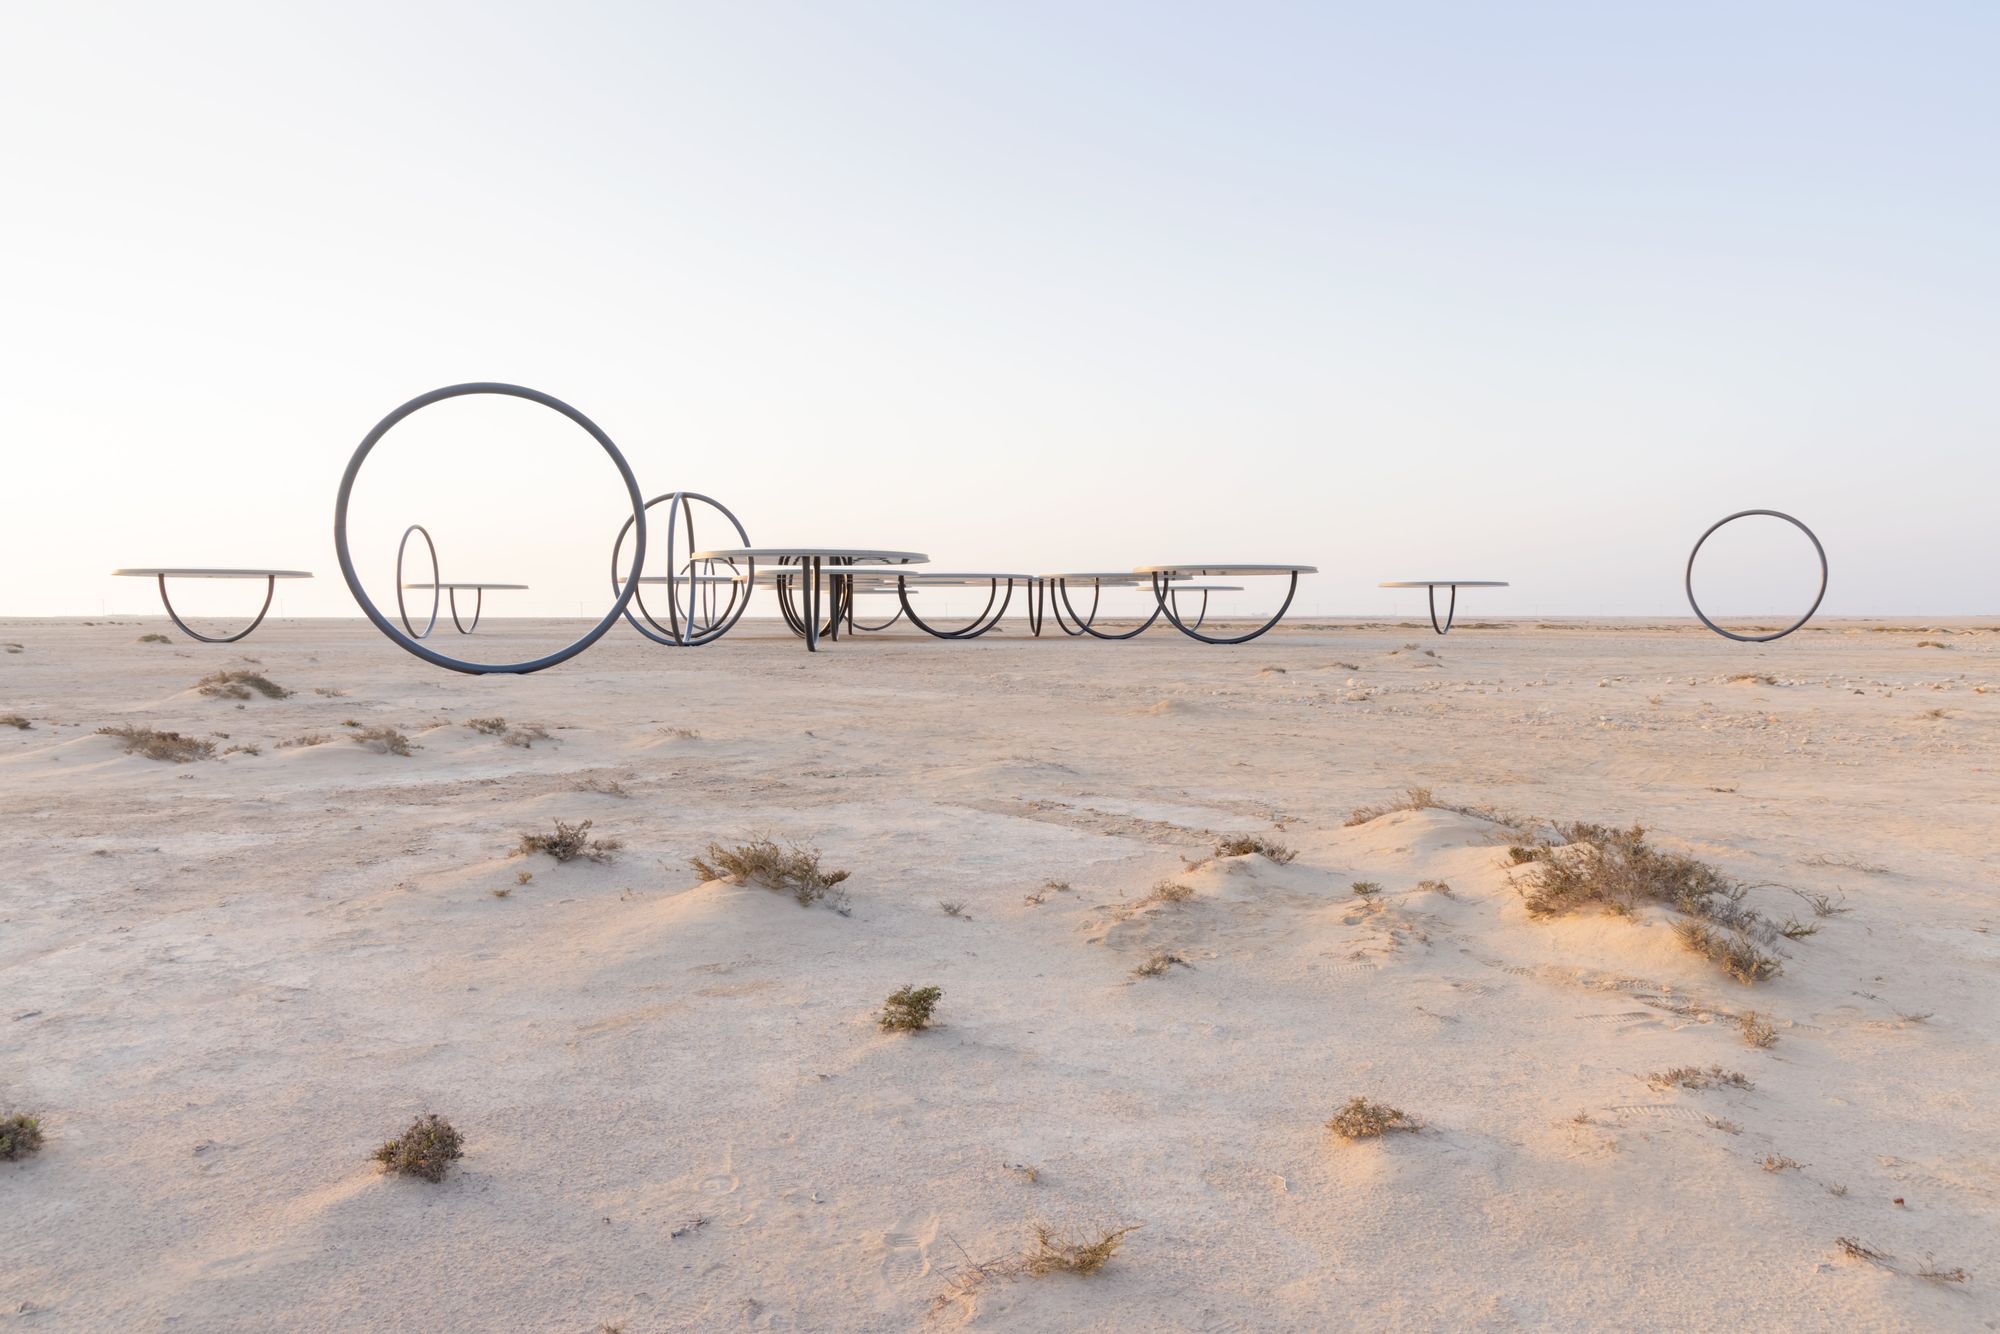 Ólafur Eliasson has built spectacular installations in the Qatari desert